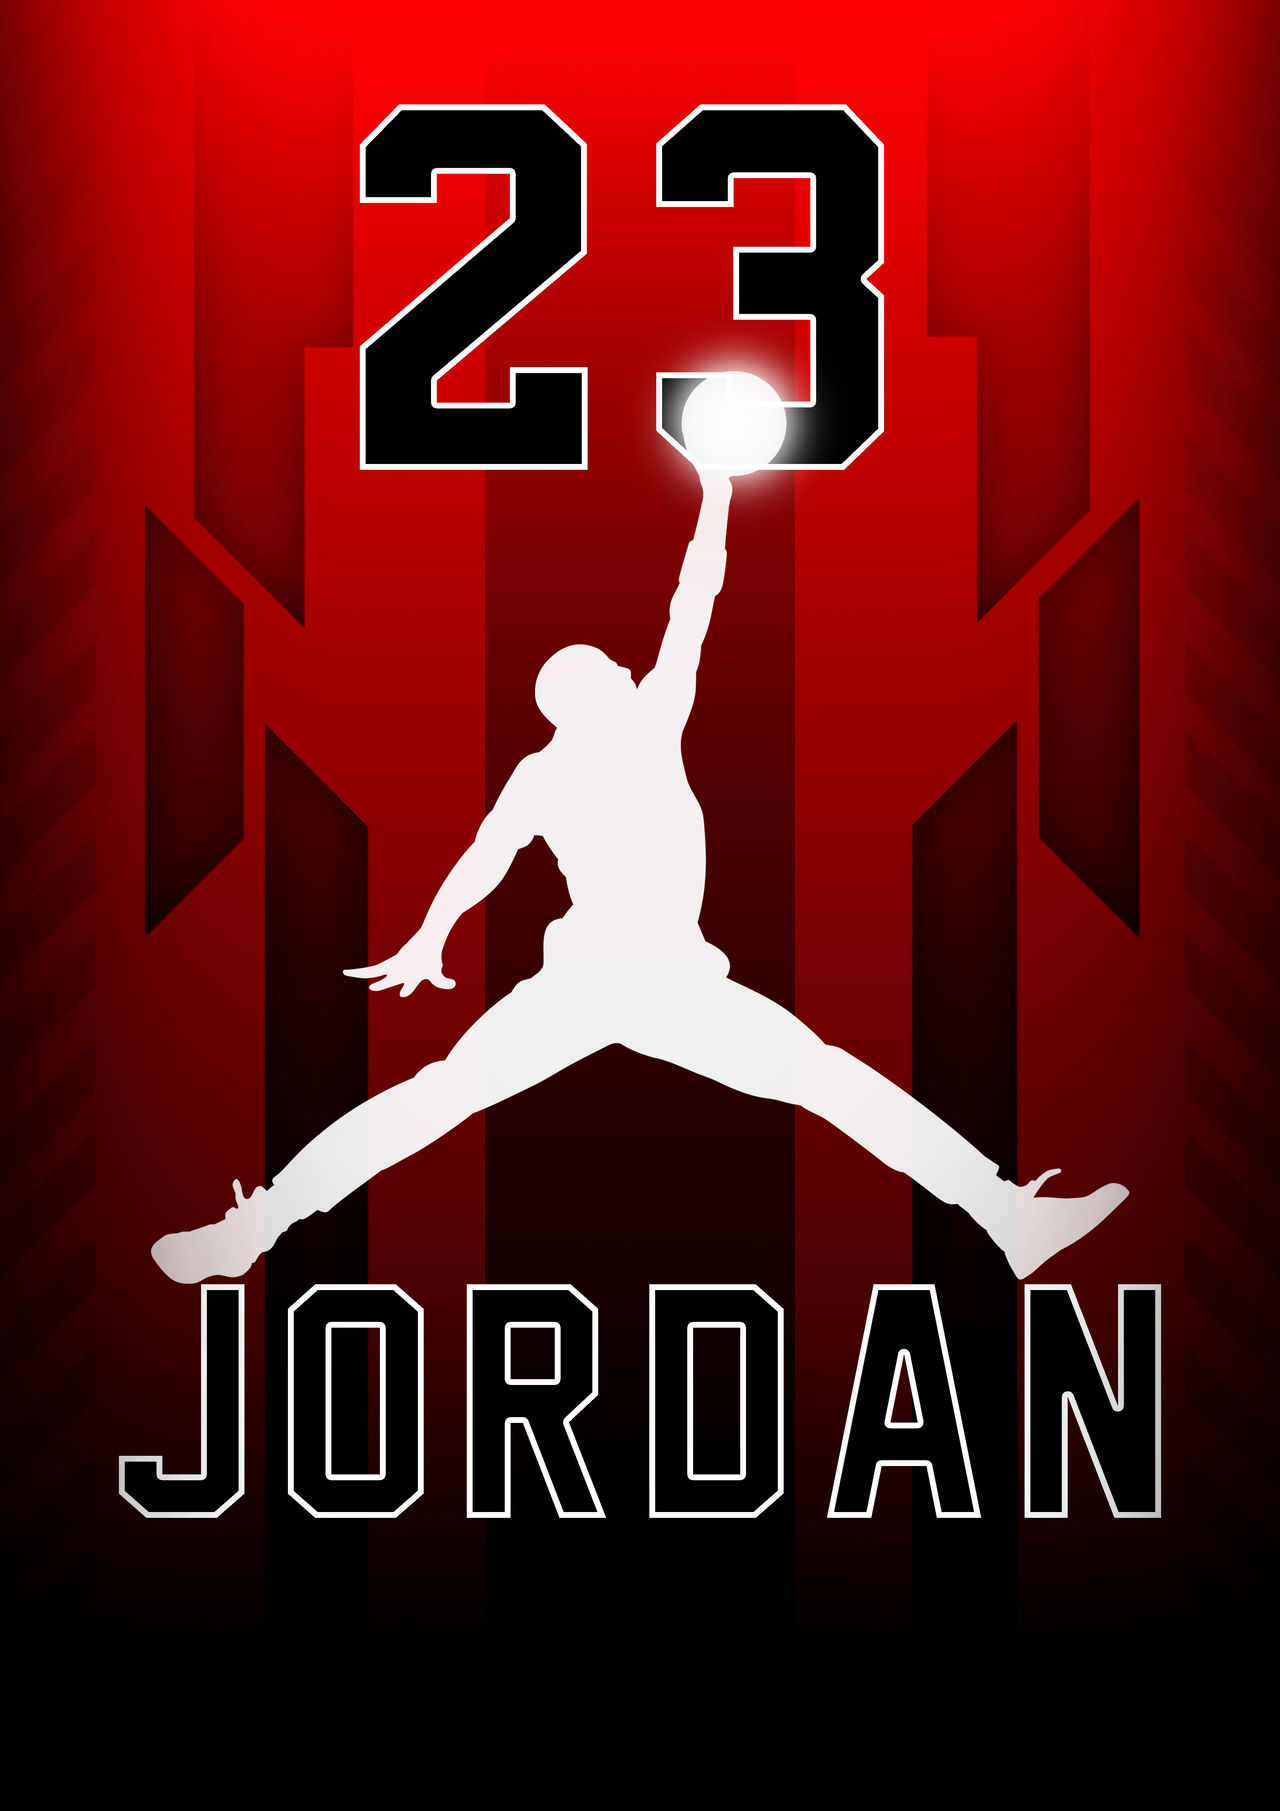 Michael Jordan basketball poster design by Ismoka on DeviantArt